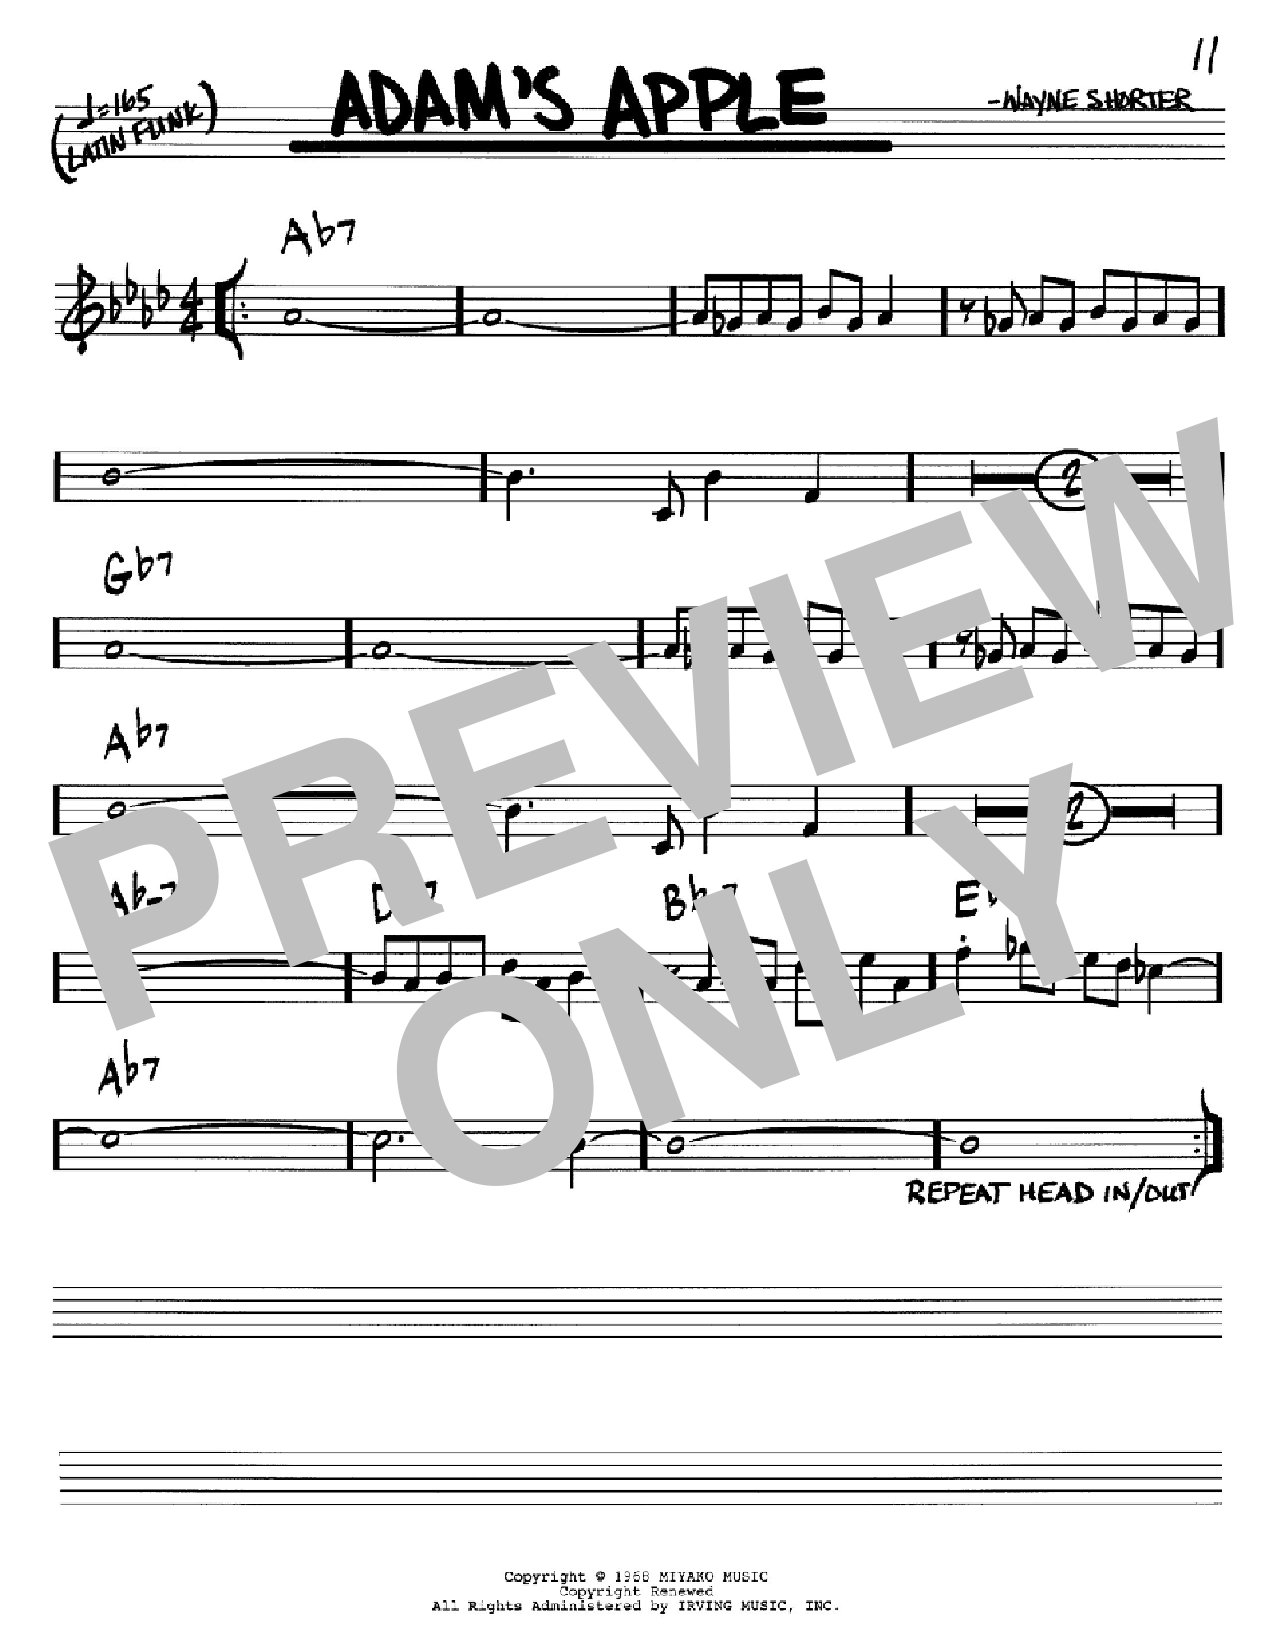 Wayne Shorter Adam's Apple Sheet Music Notes & Chords for Tenor Sax Transcription - Download or Print PDF